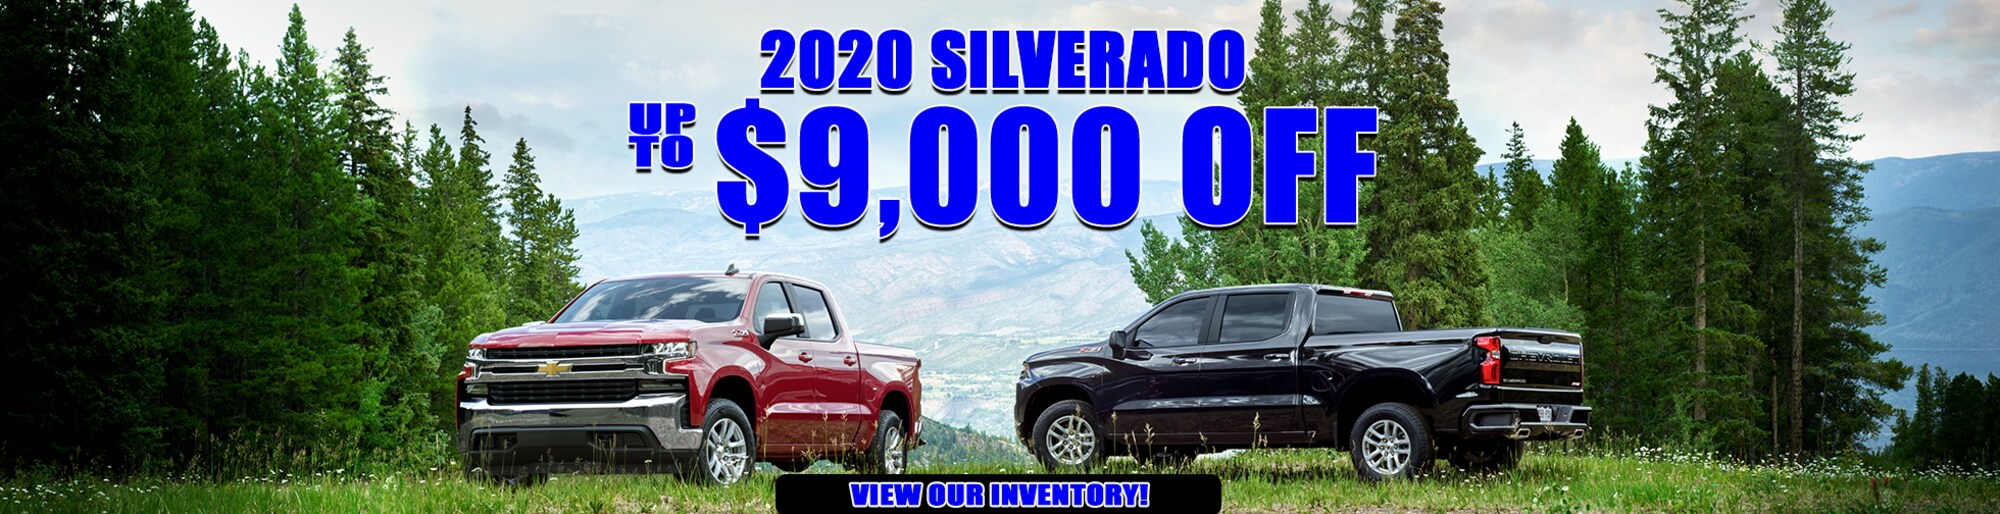 STILLWATER MOTOR COMPANY New Chevrolet Buick Dealership in 